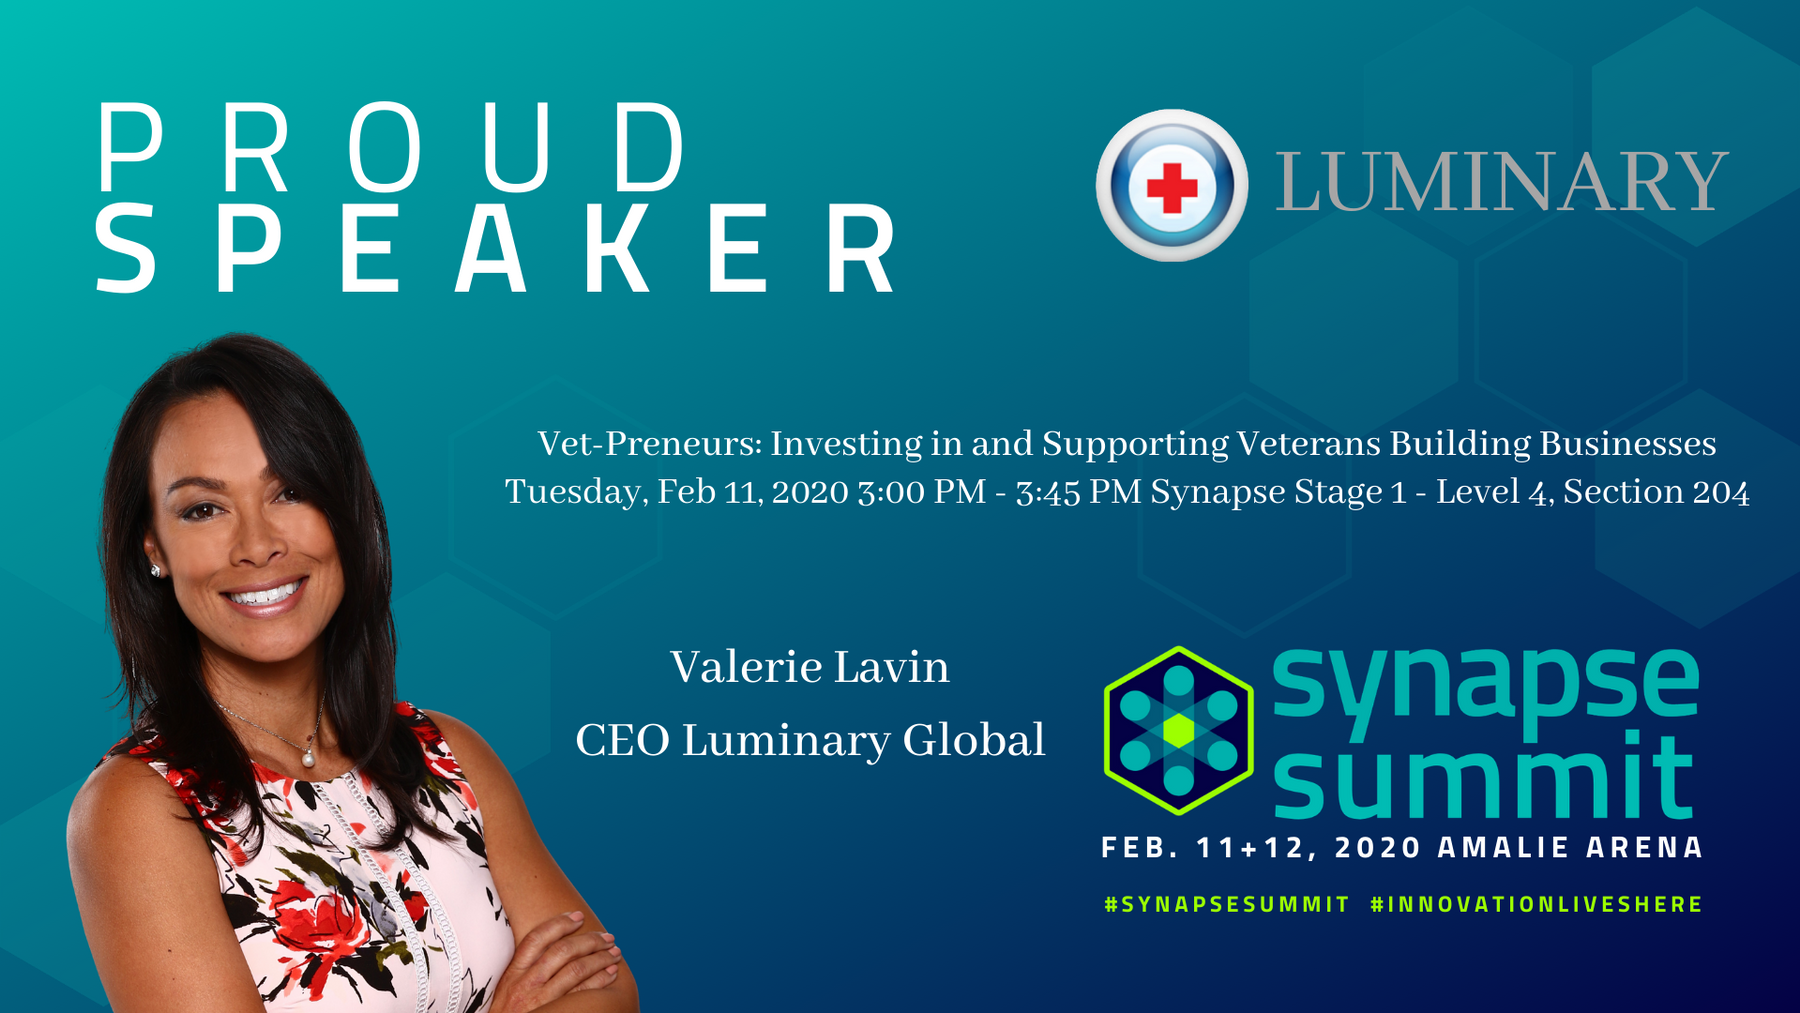 Luminary CEO Valerie Lavin - Speaker Synapse Summit 2020 February 11-12, 2020